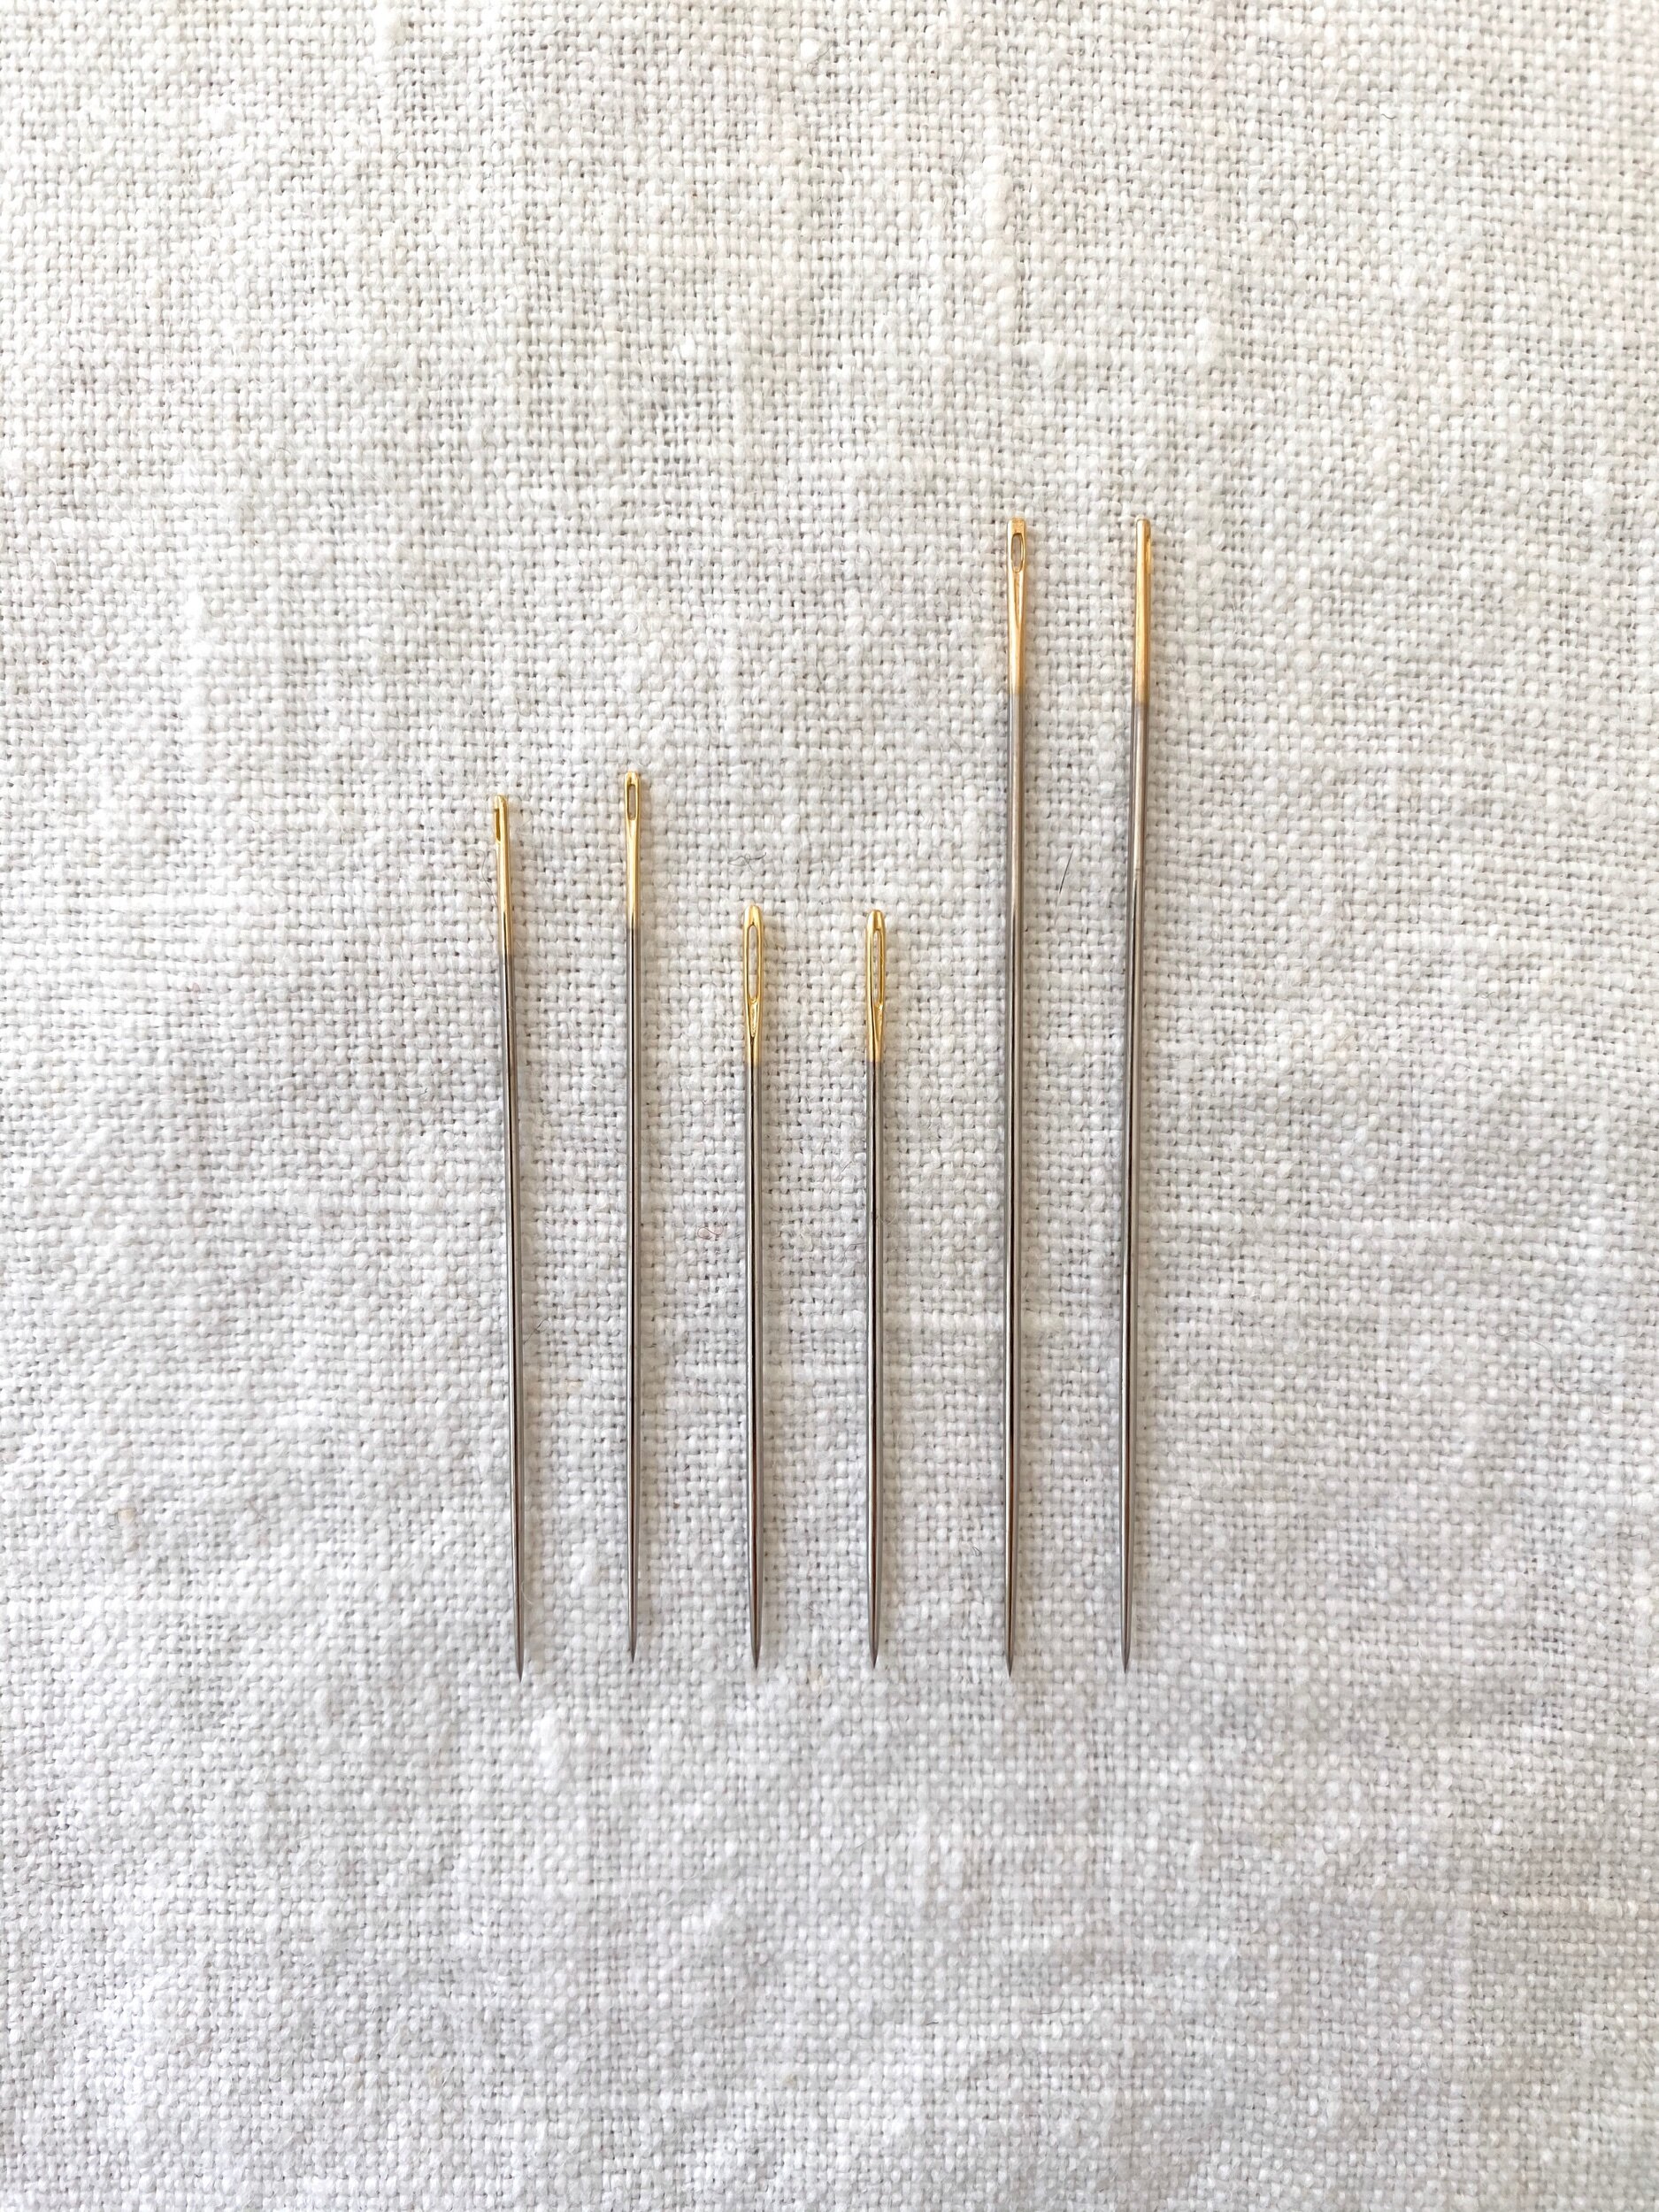 Assorted Short Sashiko Needles